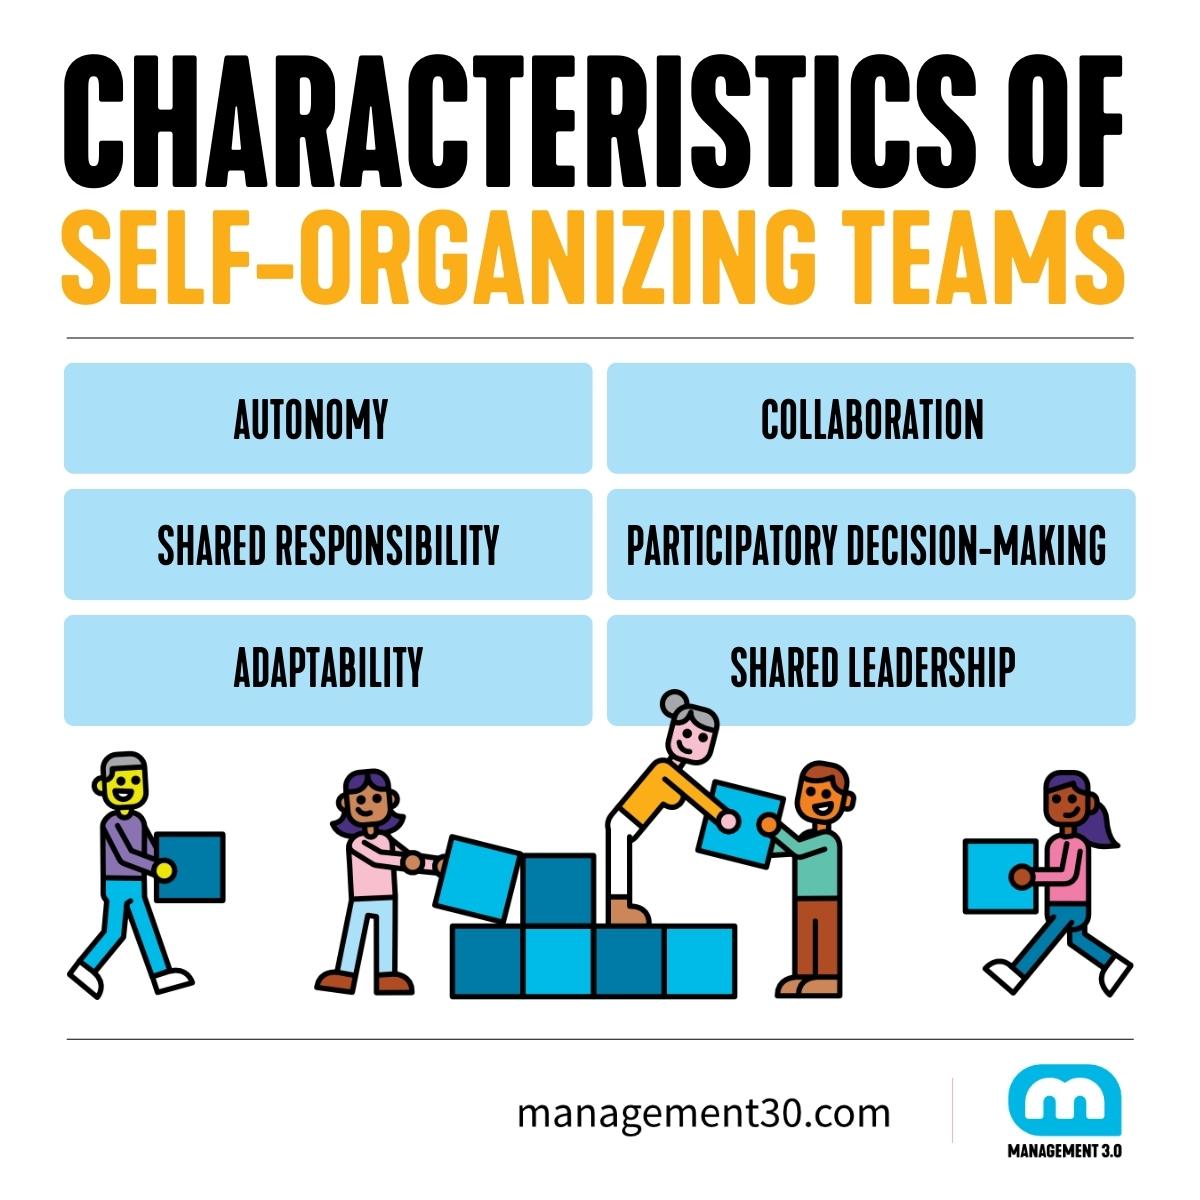 Characteristics of self-organizing teams